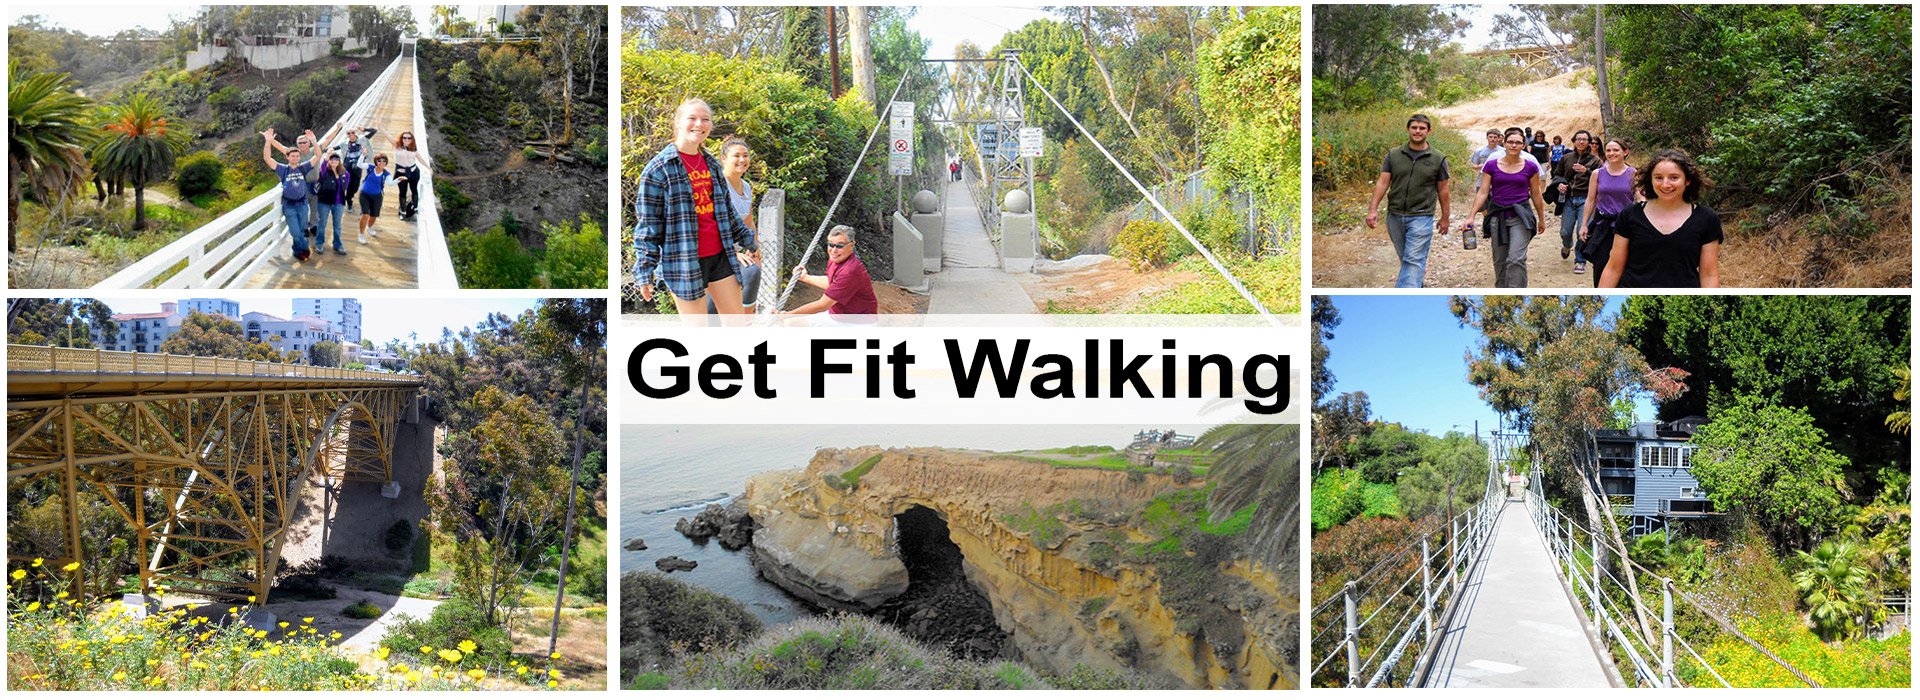 Get Fit Walking